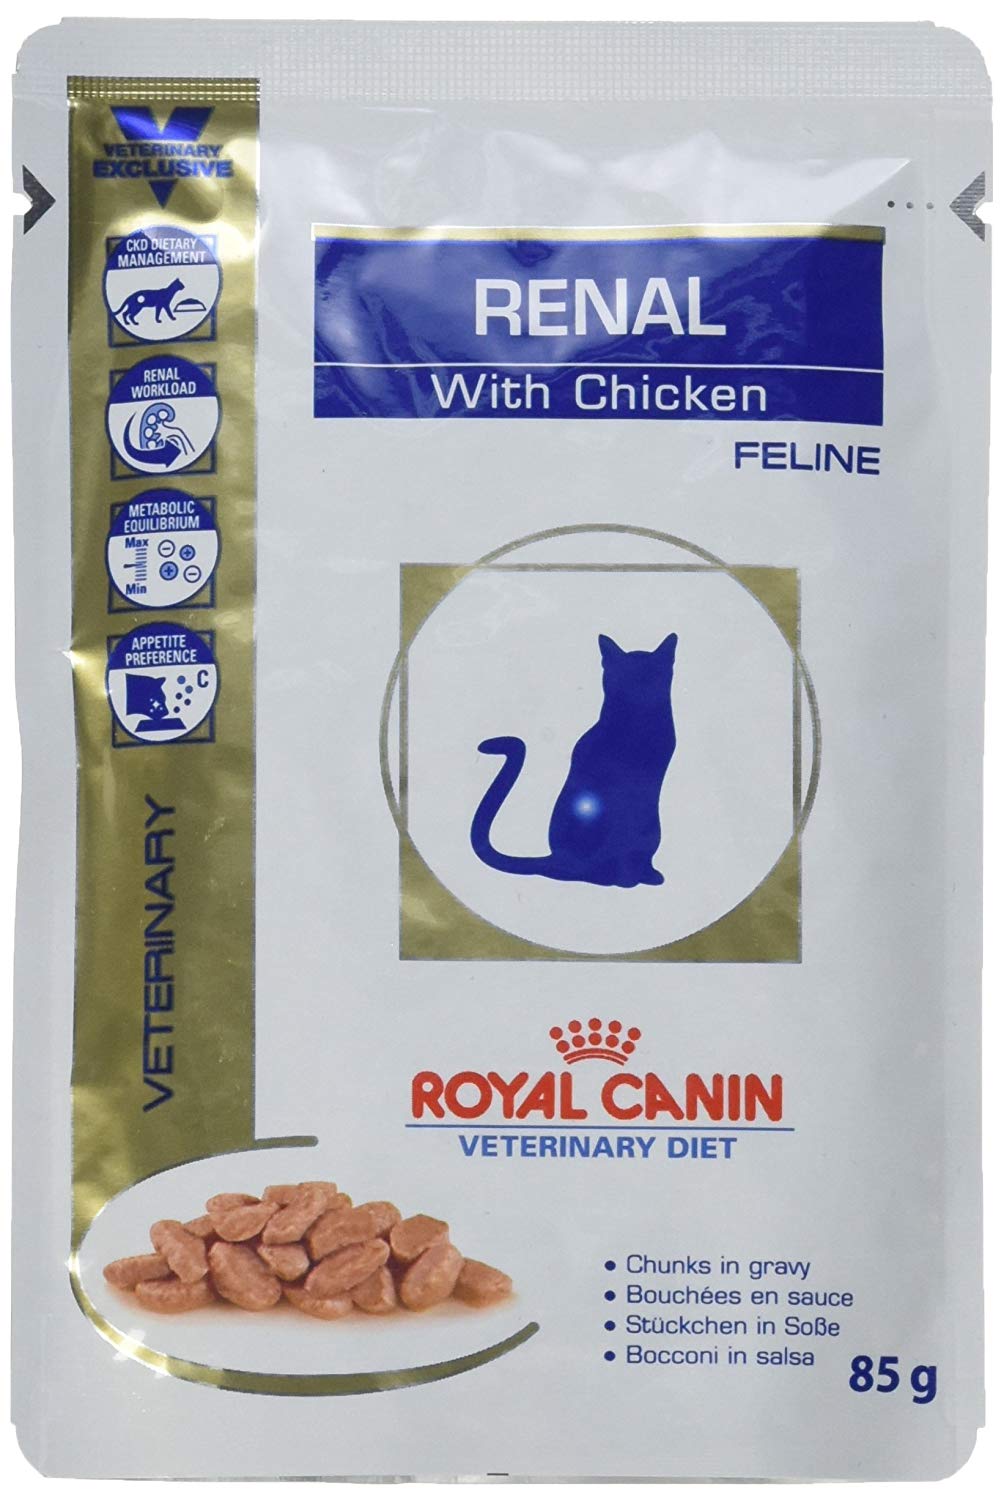 Renal canin renal для кошек купить. Royal Canin renal для кошек. Royal Canin renal with Chicken для кошек. Royal Canin renal Feline Chicken. Ренал Advanced для кошек.